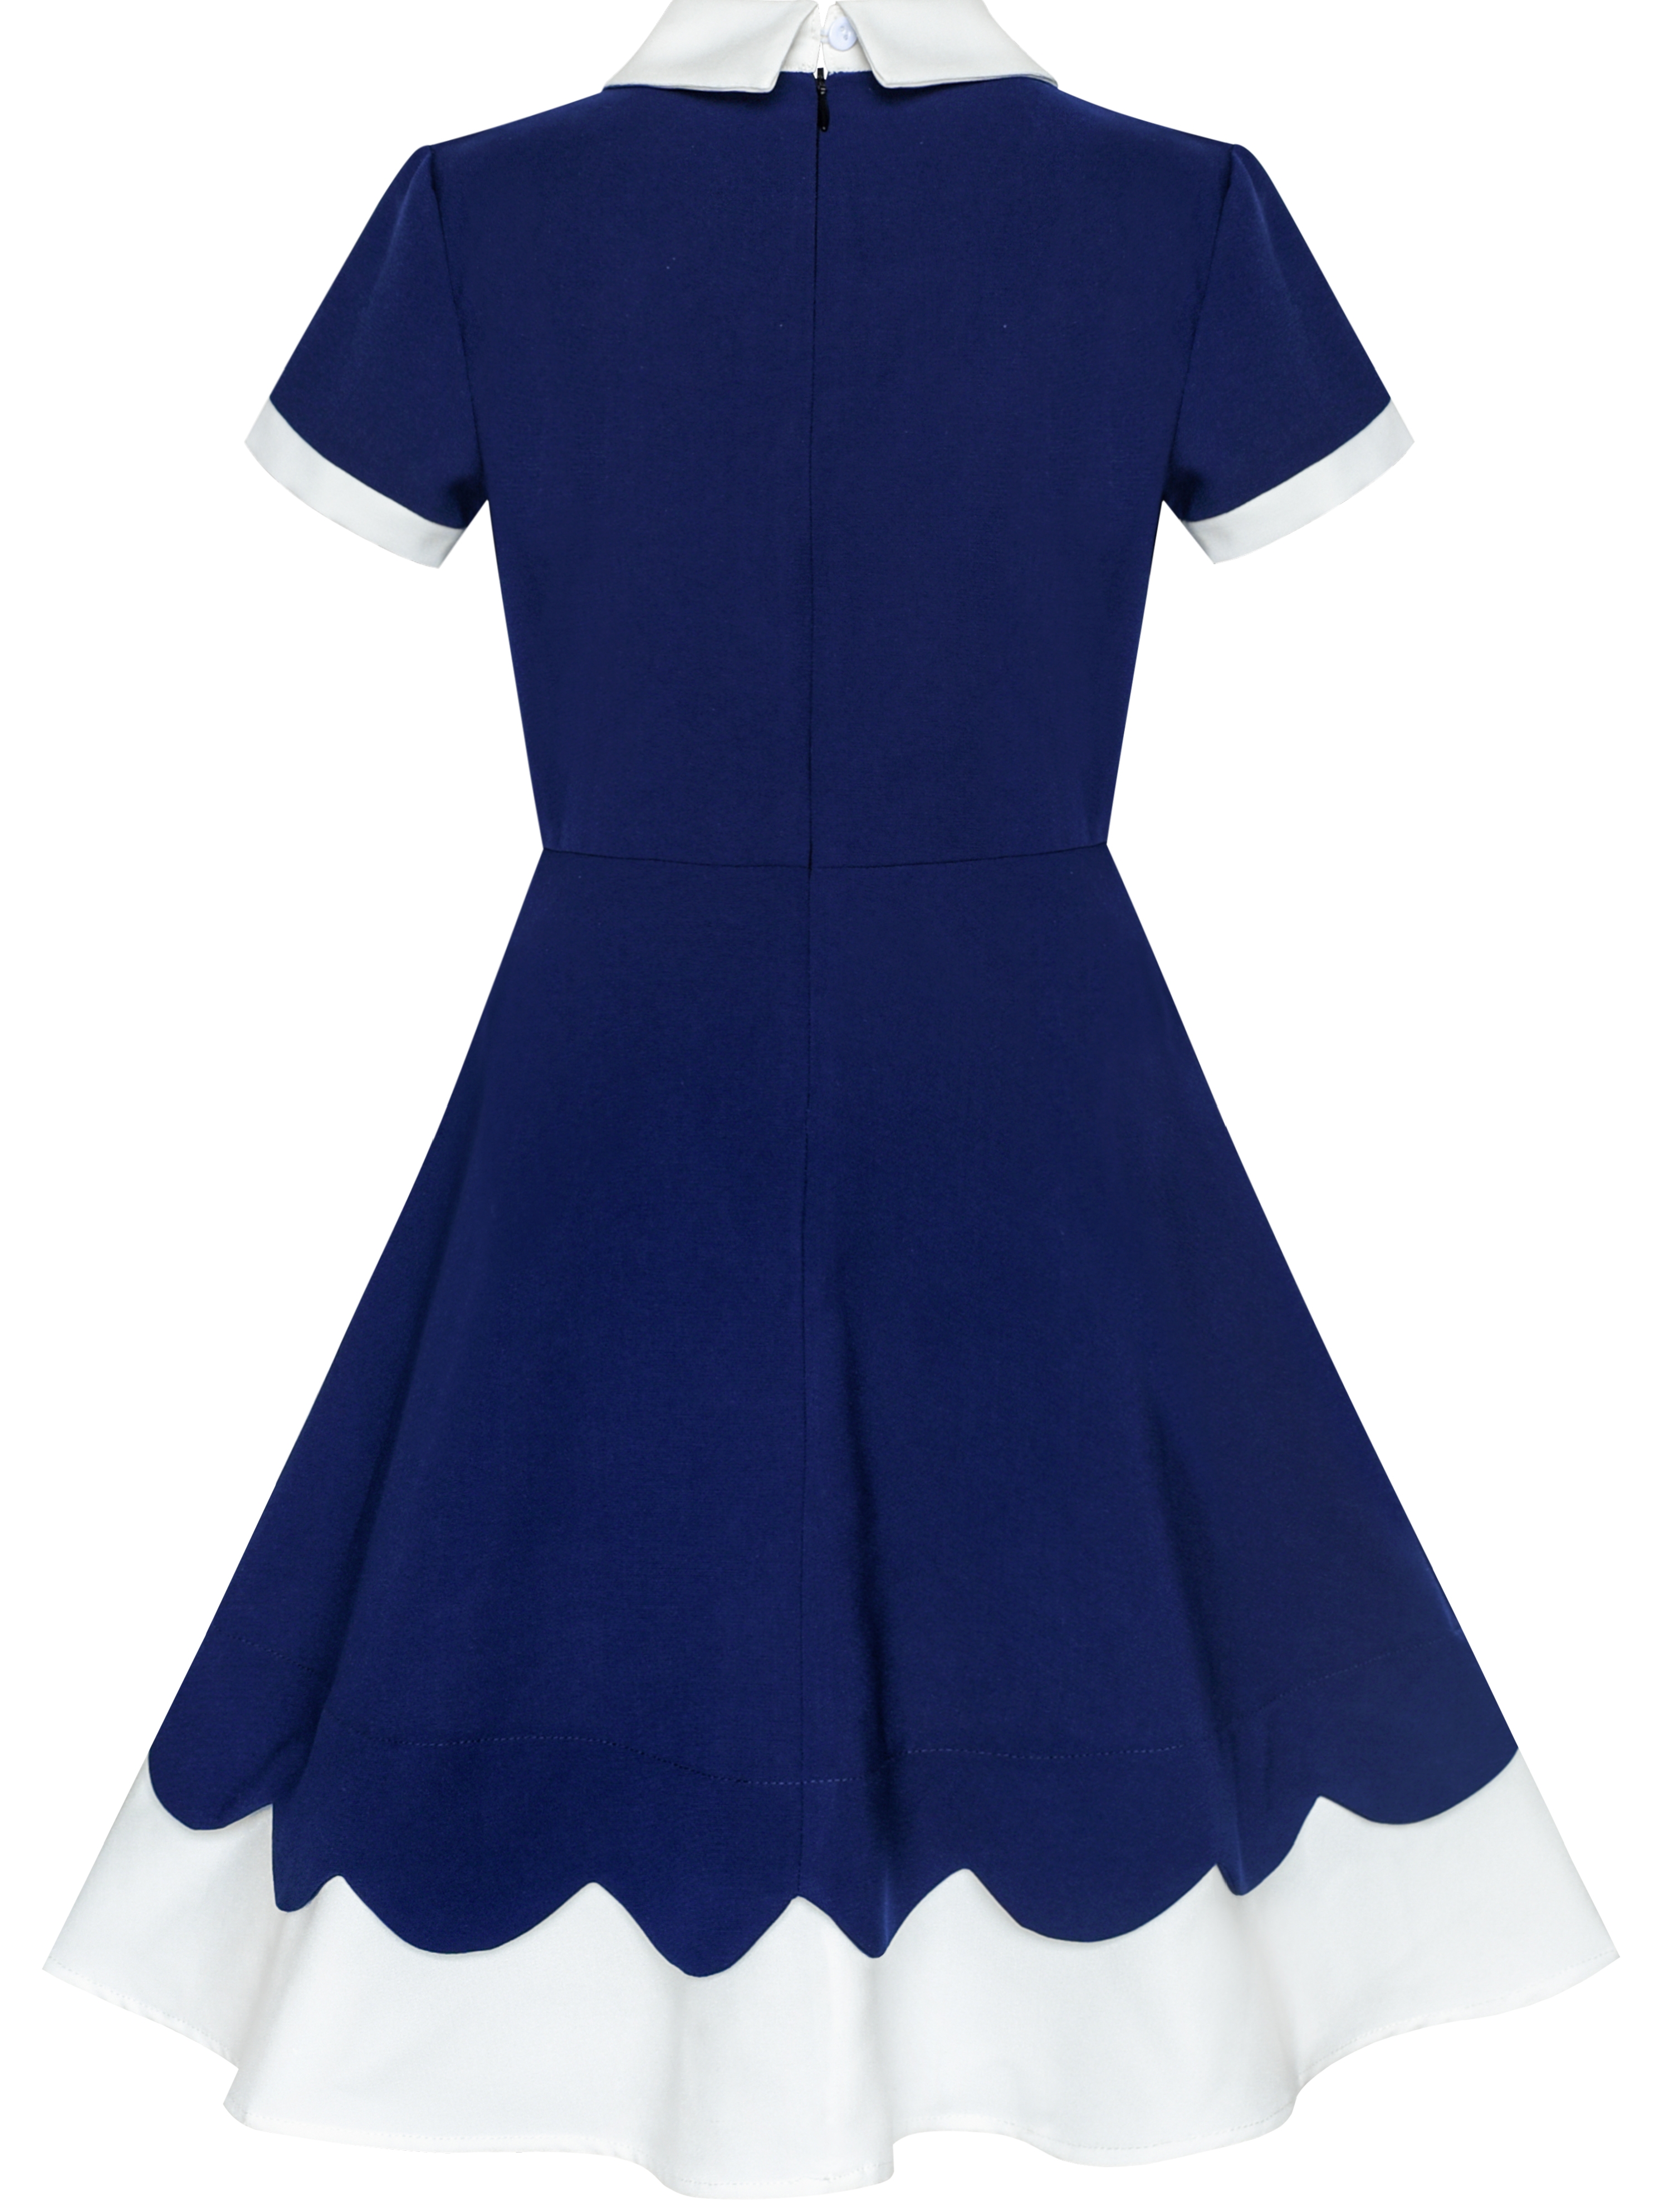 Girls Dress Back School Uniform Navy Blue White Collar Tie Short Sleeve 5 Years - image 3 of 6